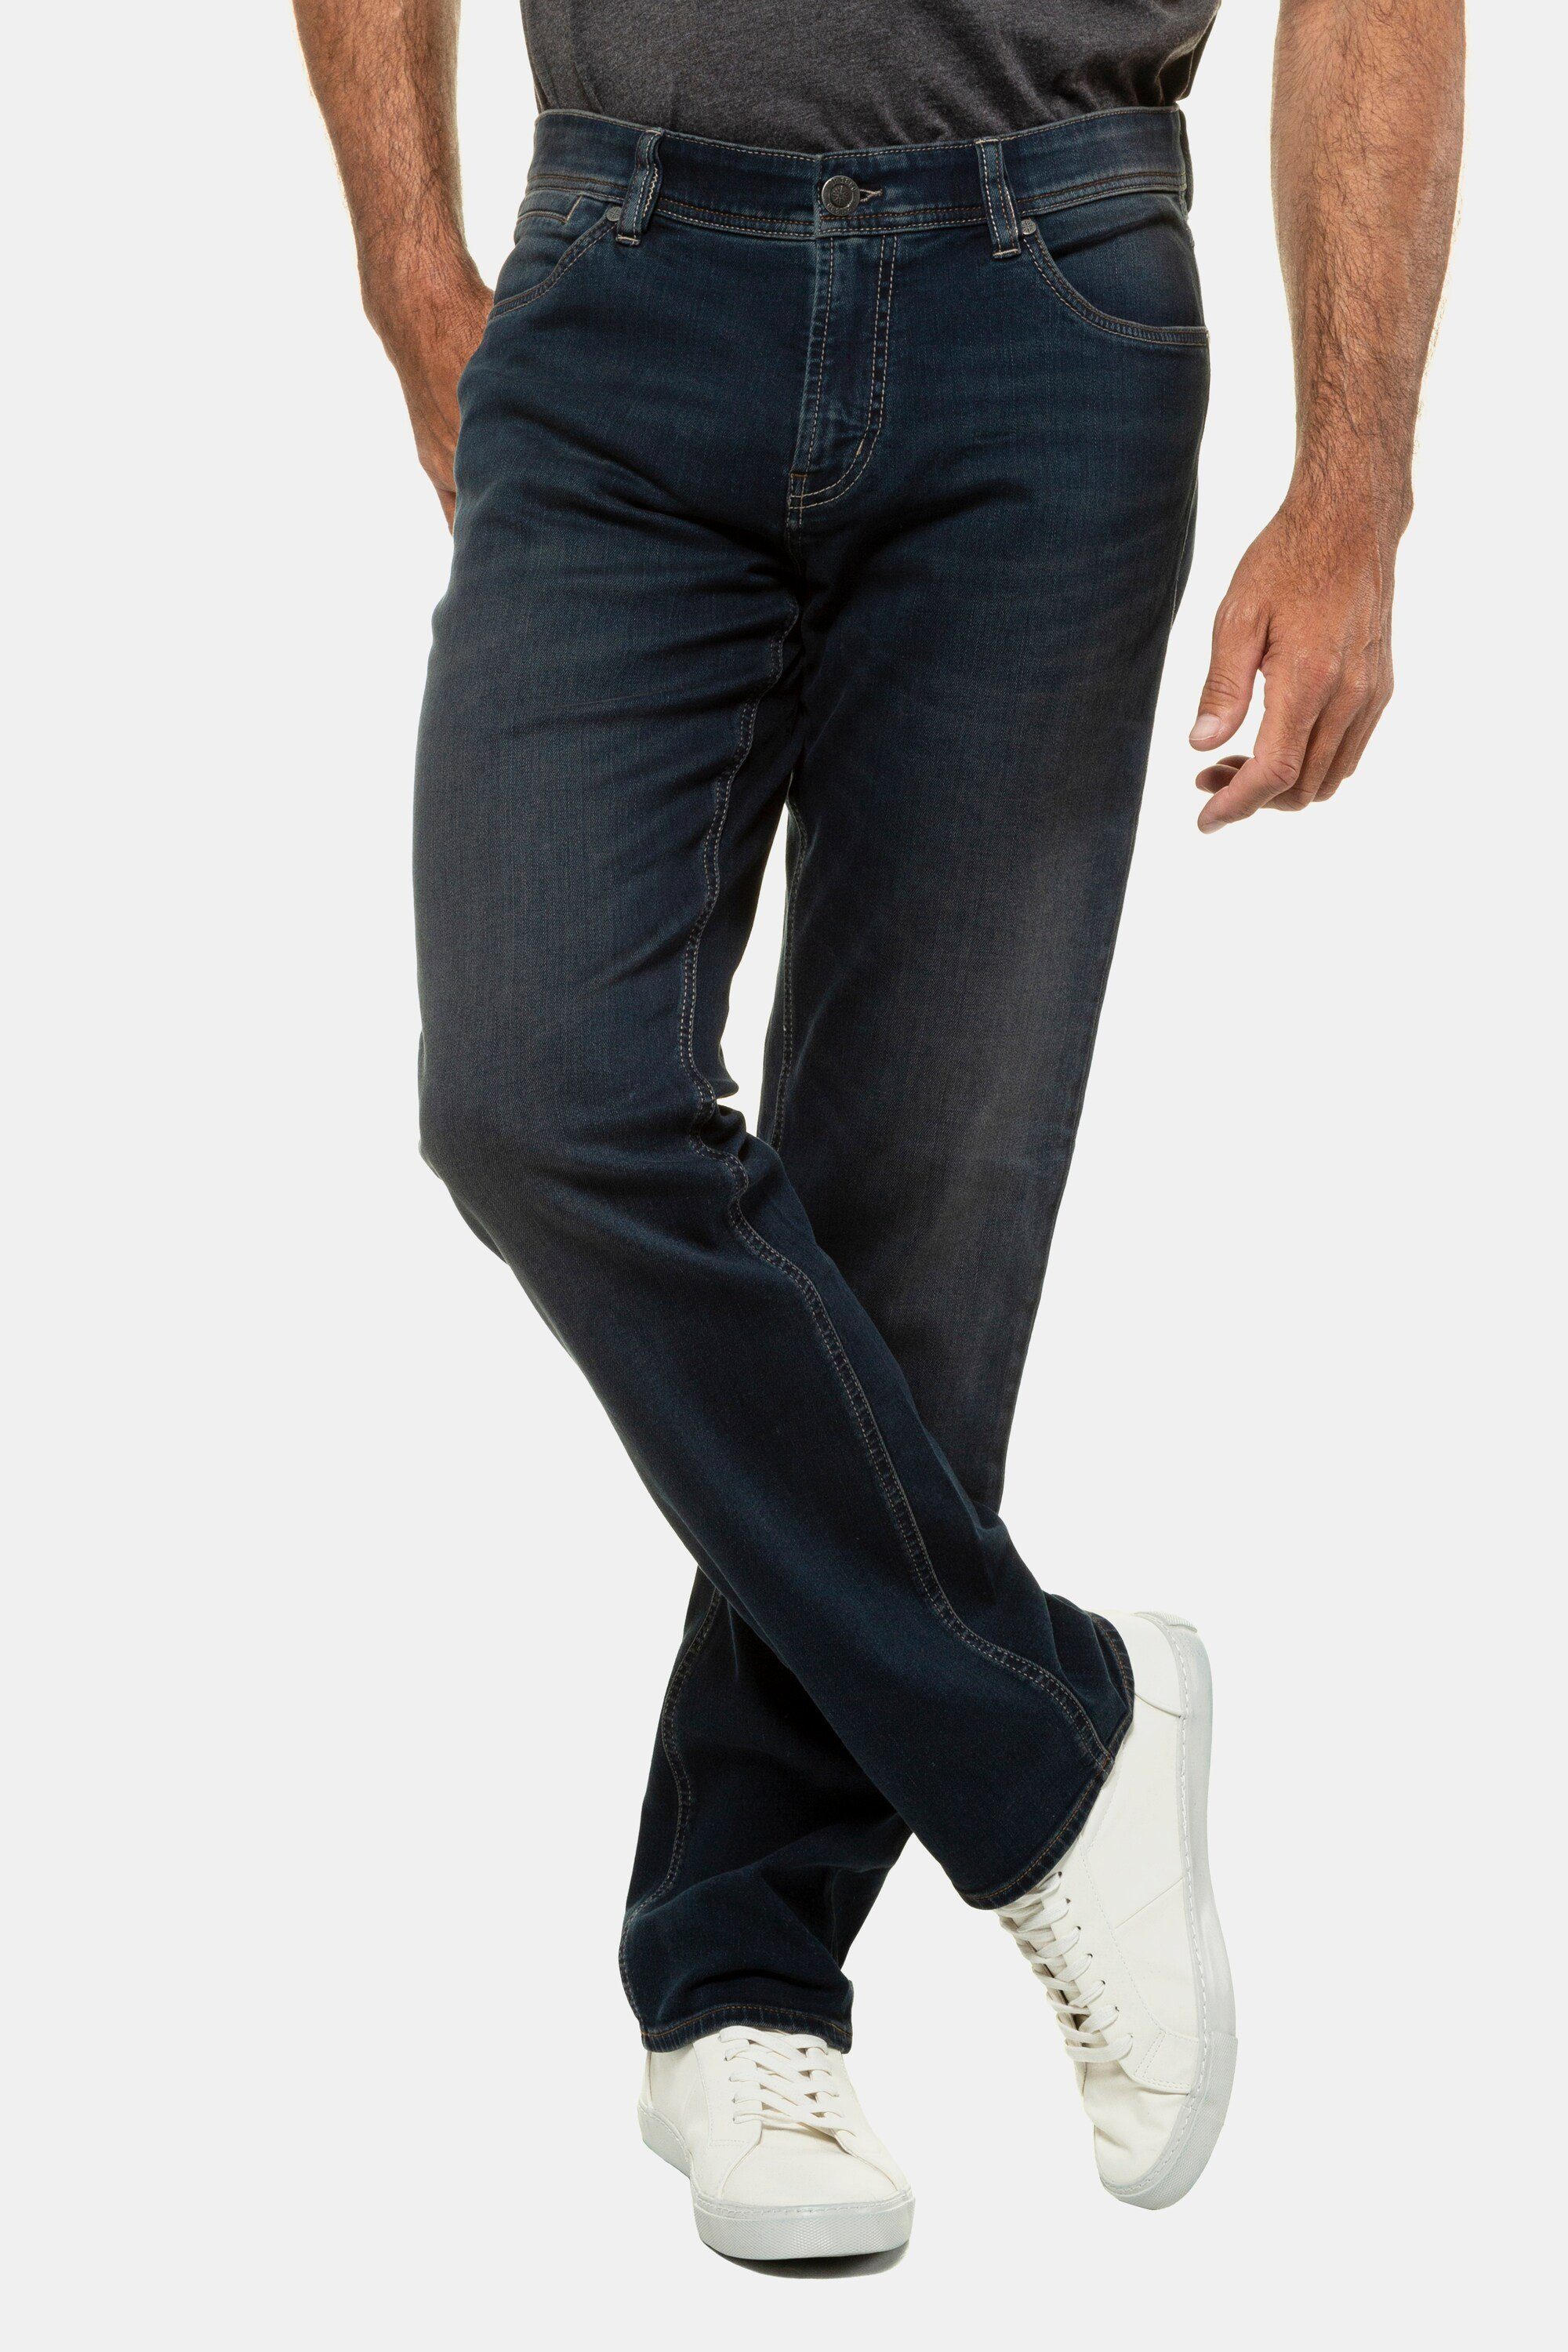 【Mode】 JP1880 Cargohose Jeans Bauchfit Denim denim Gr. blue bis 70/35